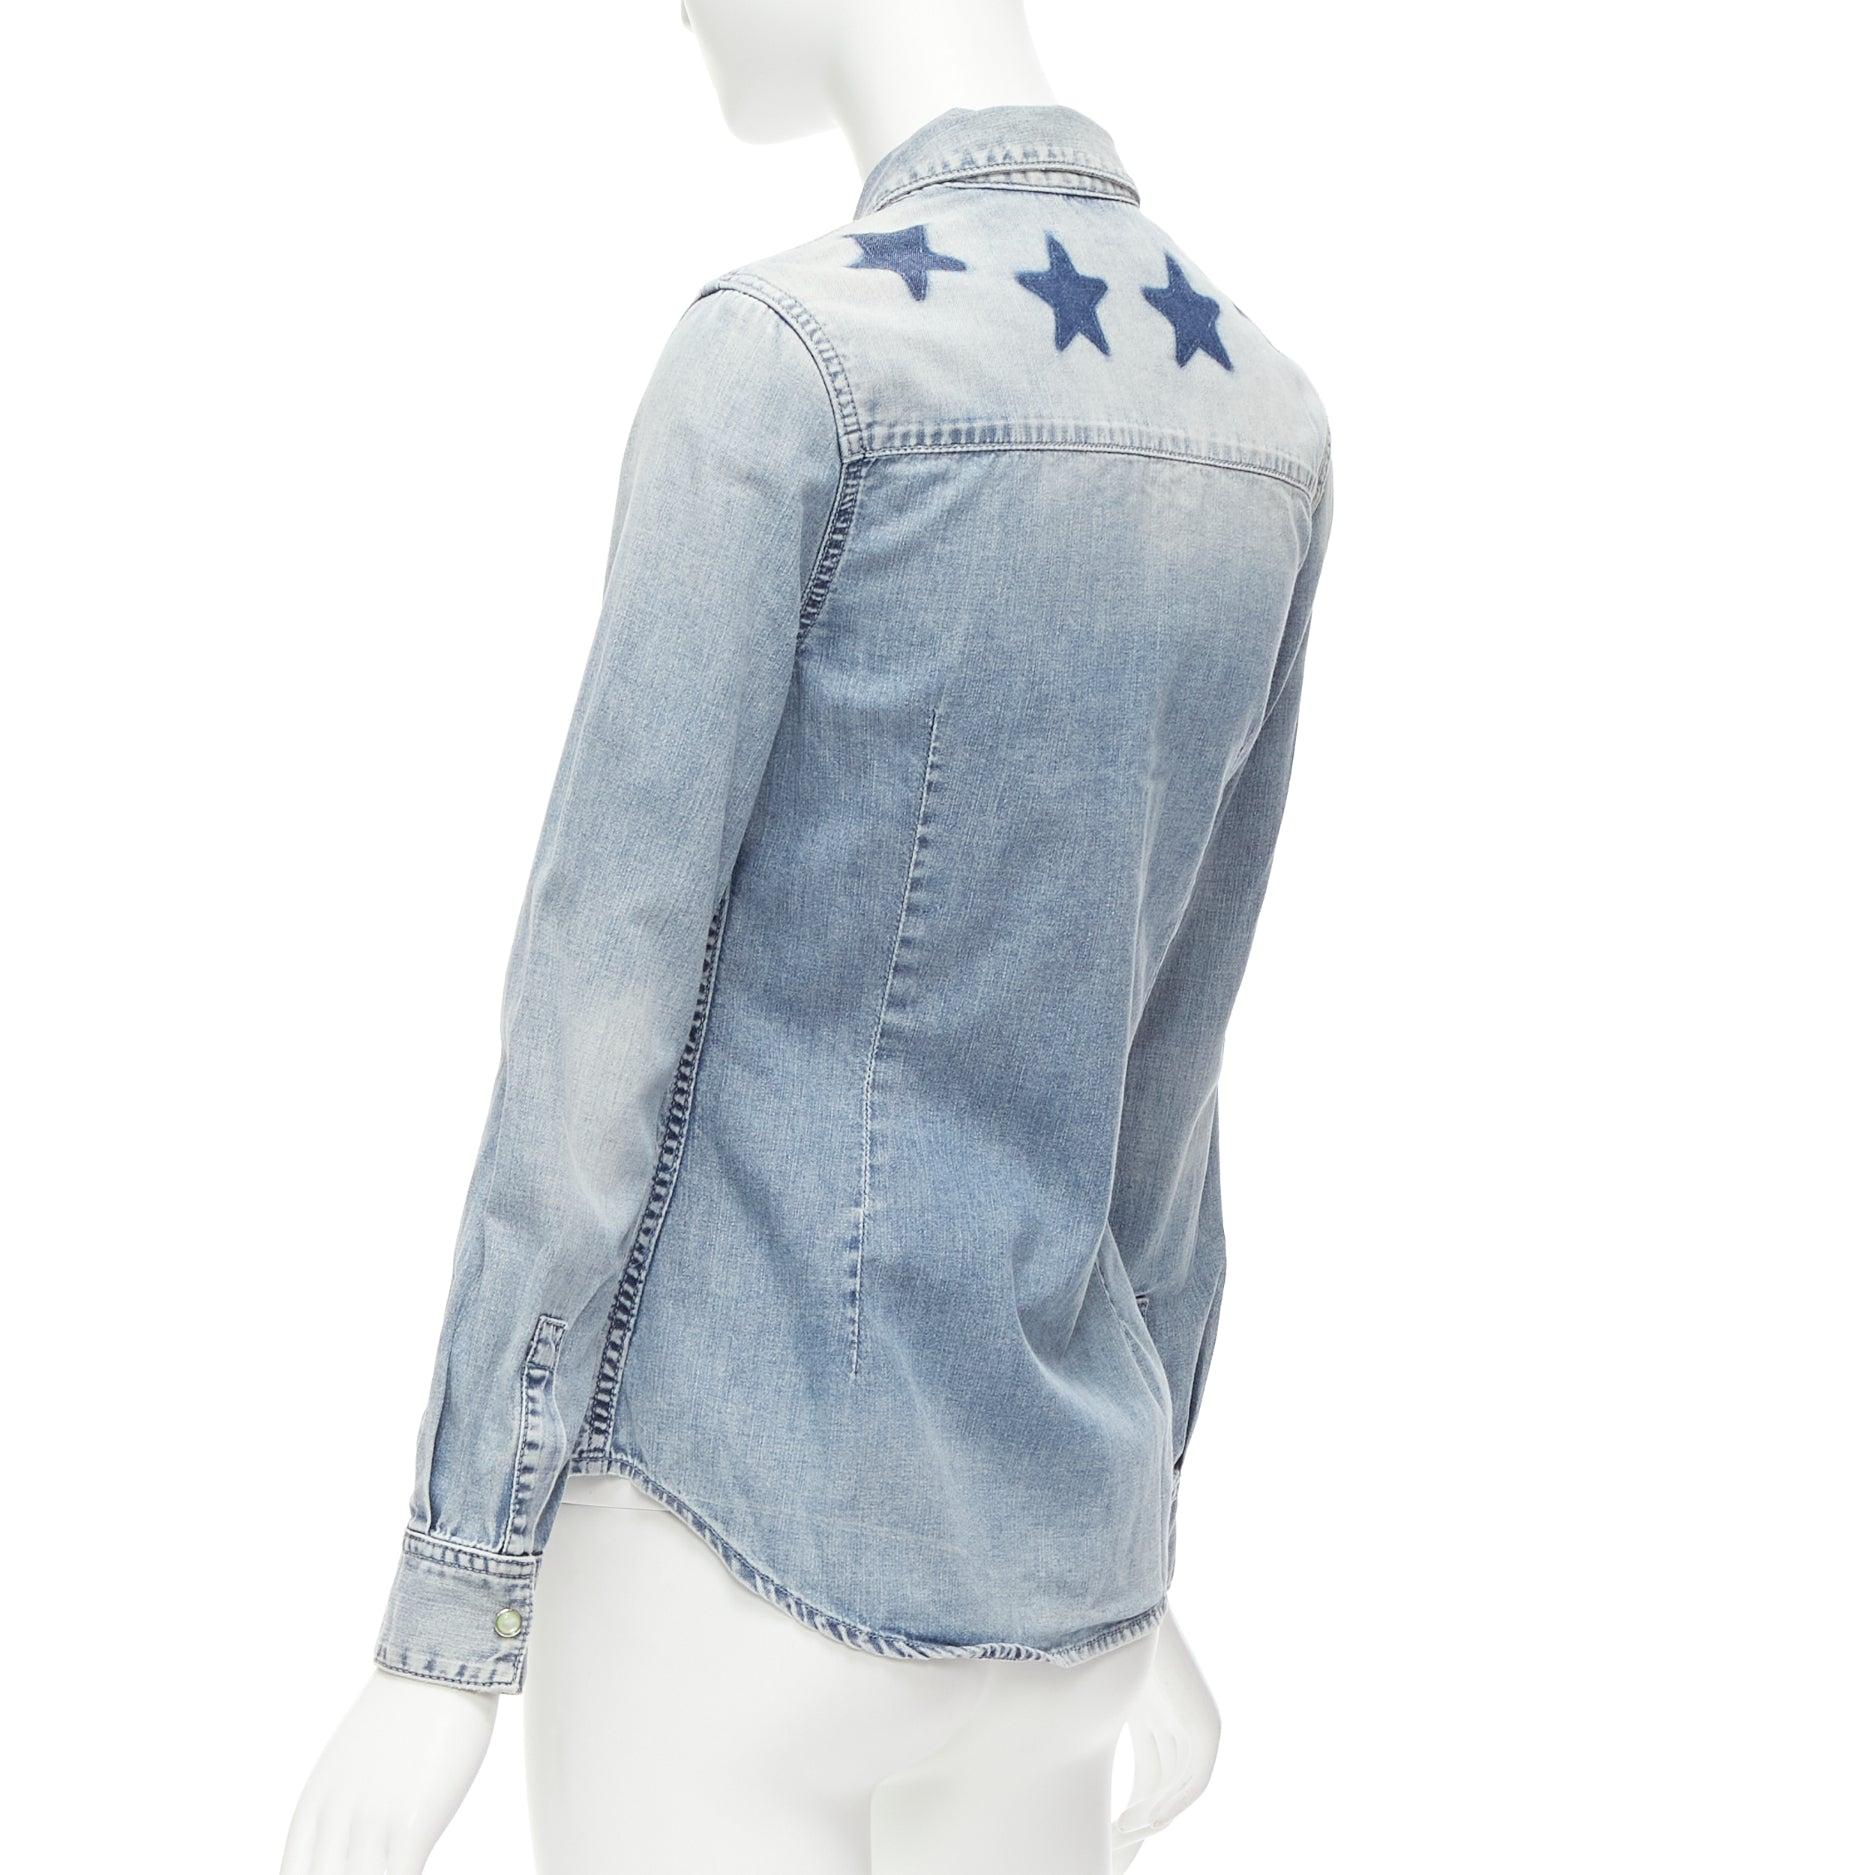 GIVENCHY Riccardo Tisci blue distressed denim star collar dress shirt FR36 S For Sale 3